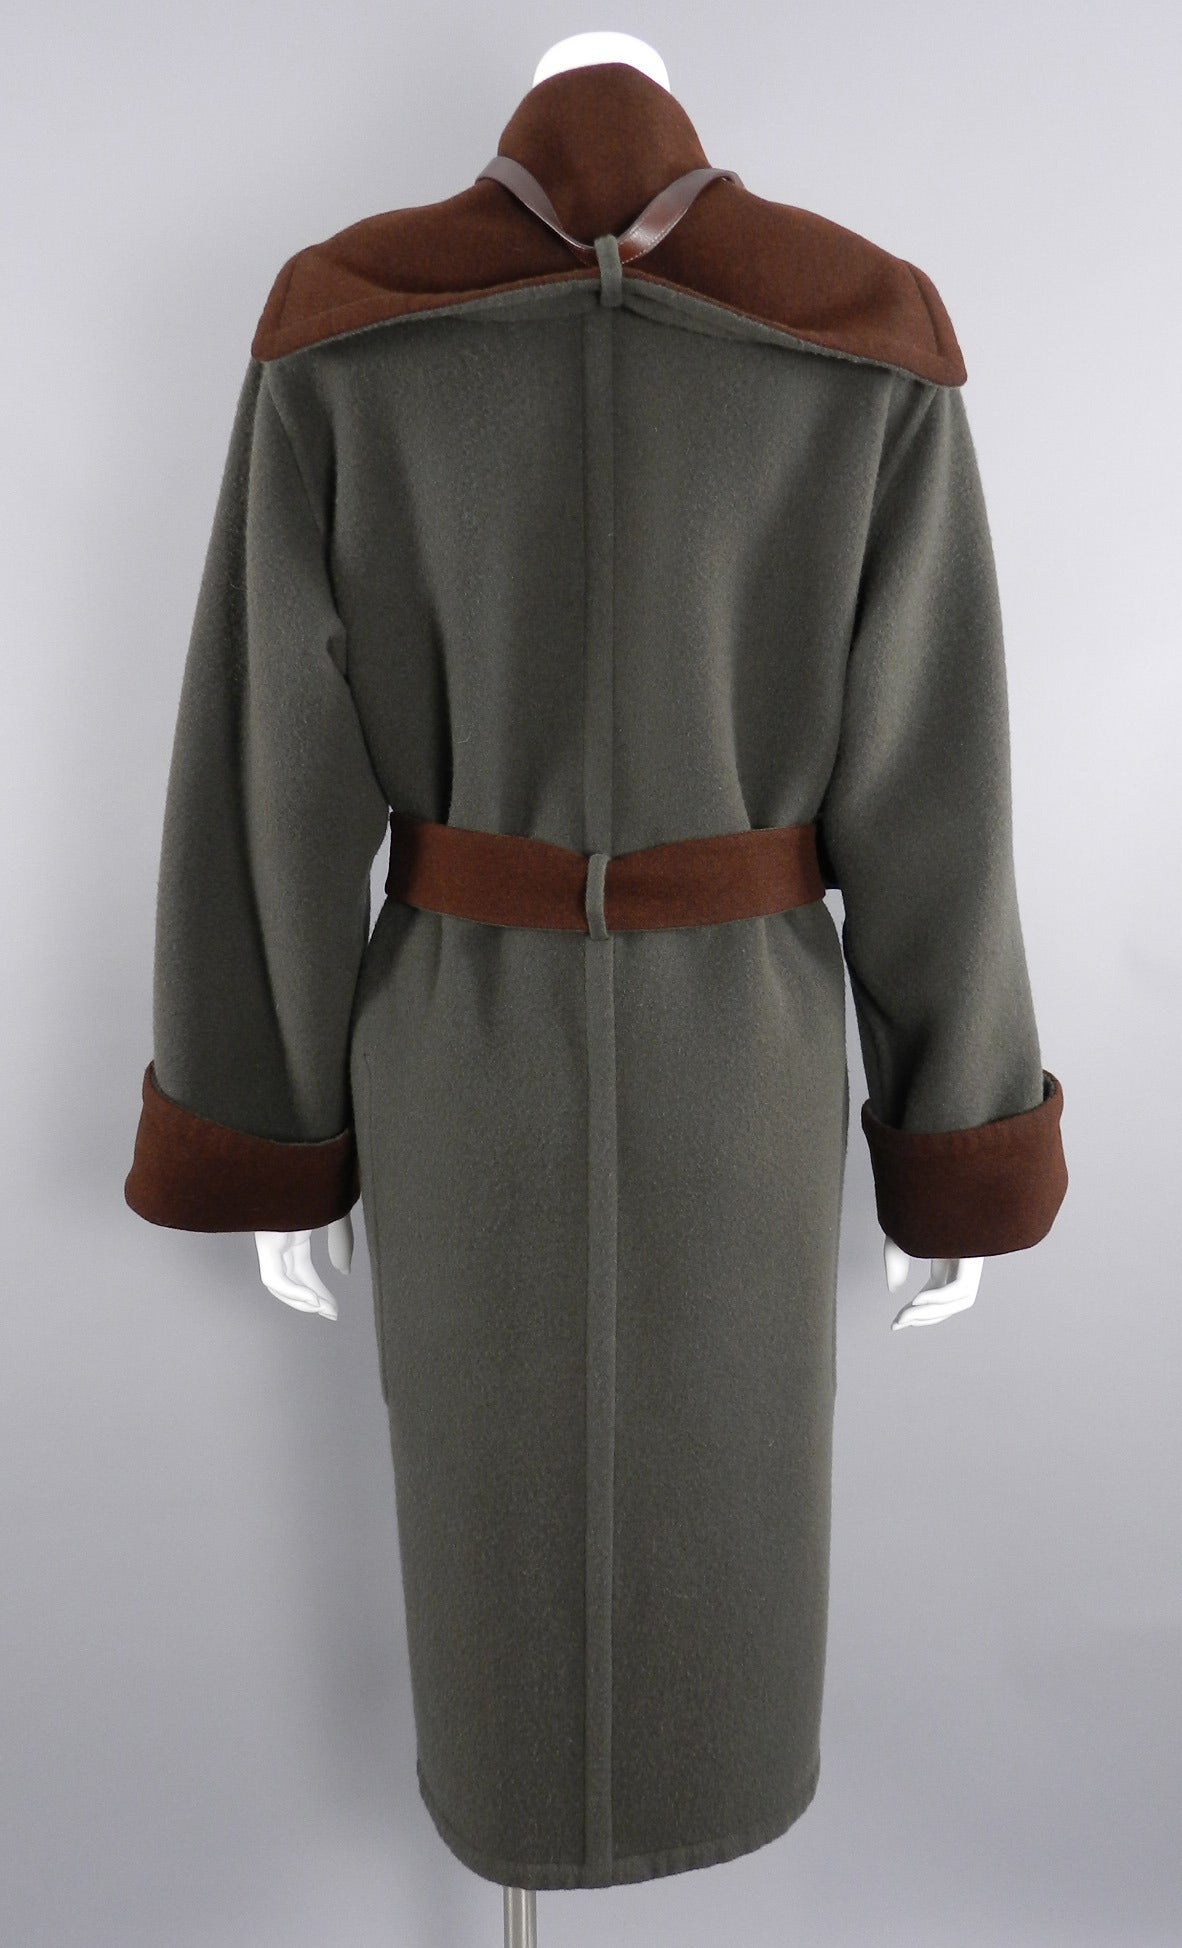 Women's Hermes Brown / Green Reversible Coat with Kelly Collar